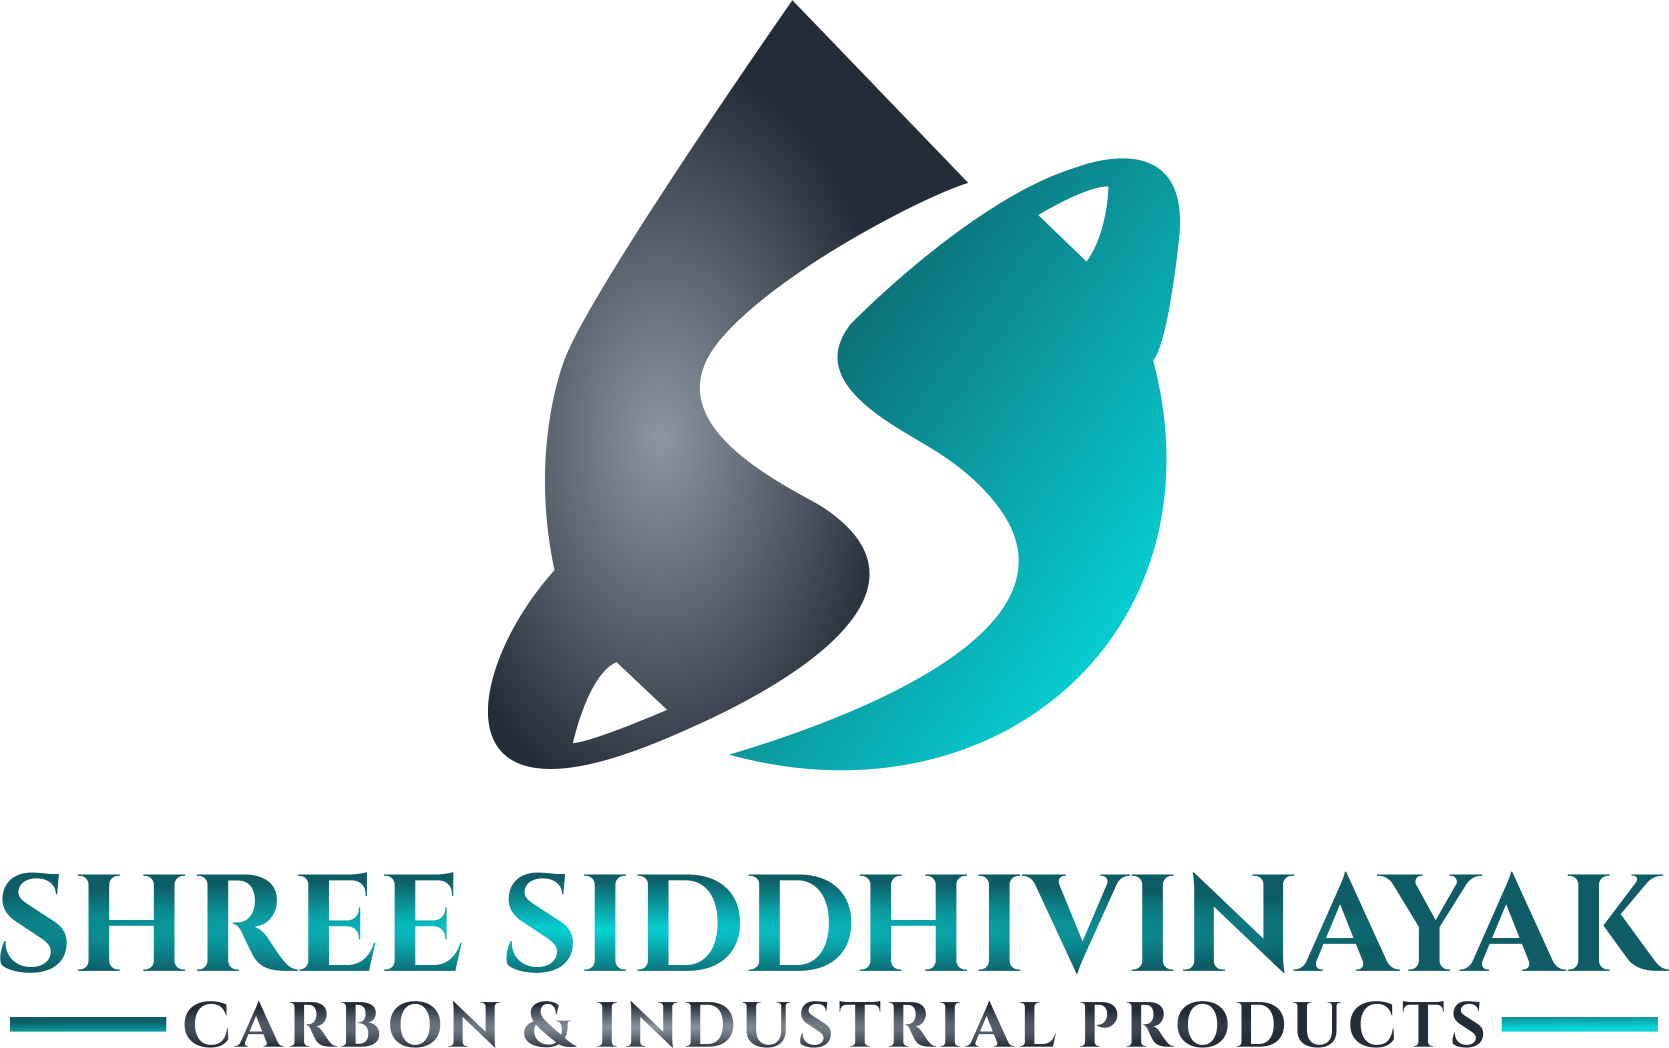 Shree Siddhivinayak Social Media Networks